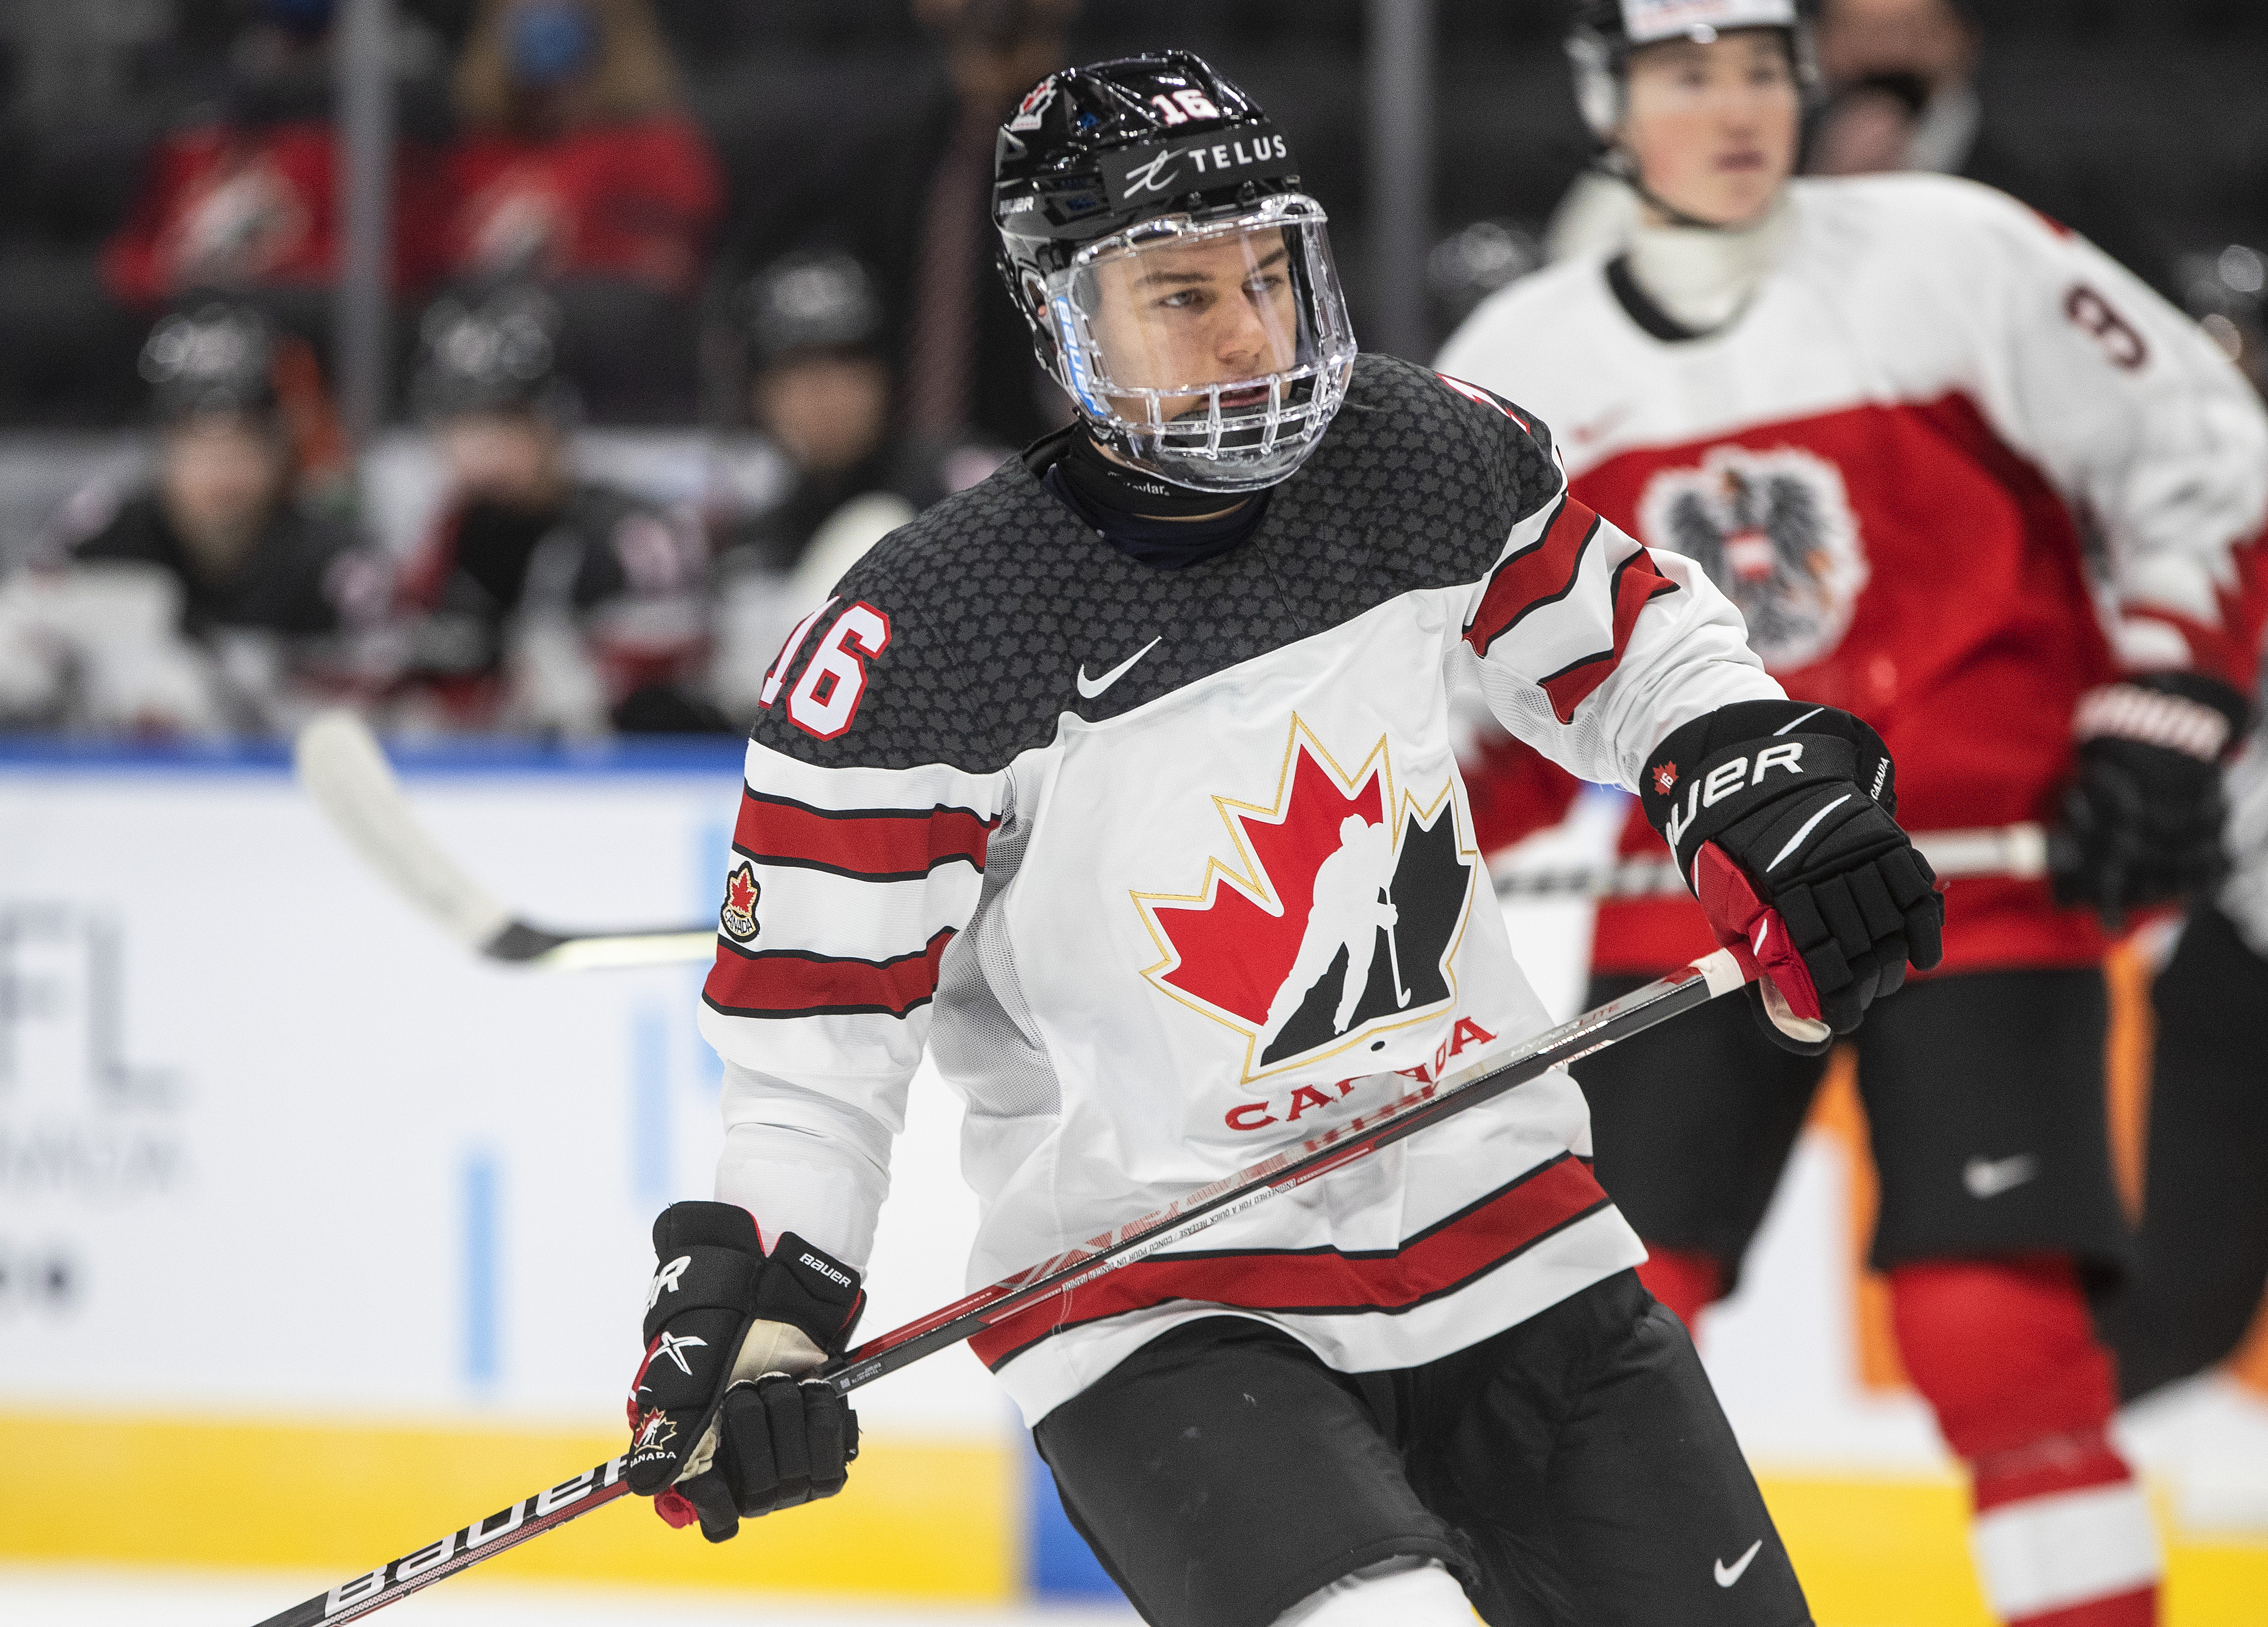 Bedard, Wright headline Team Canada's roster for 2023 World Juniors